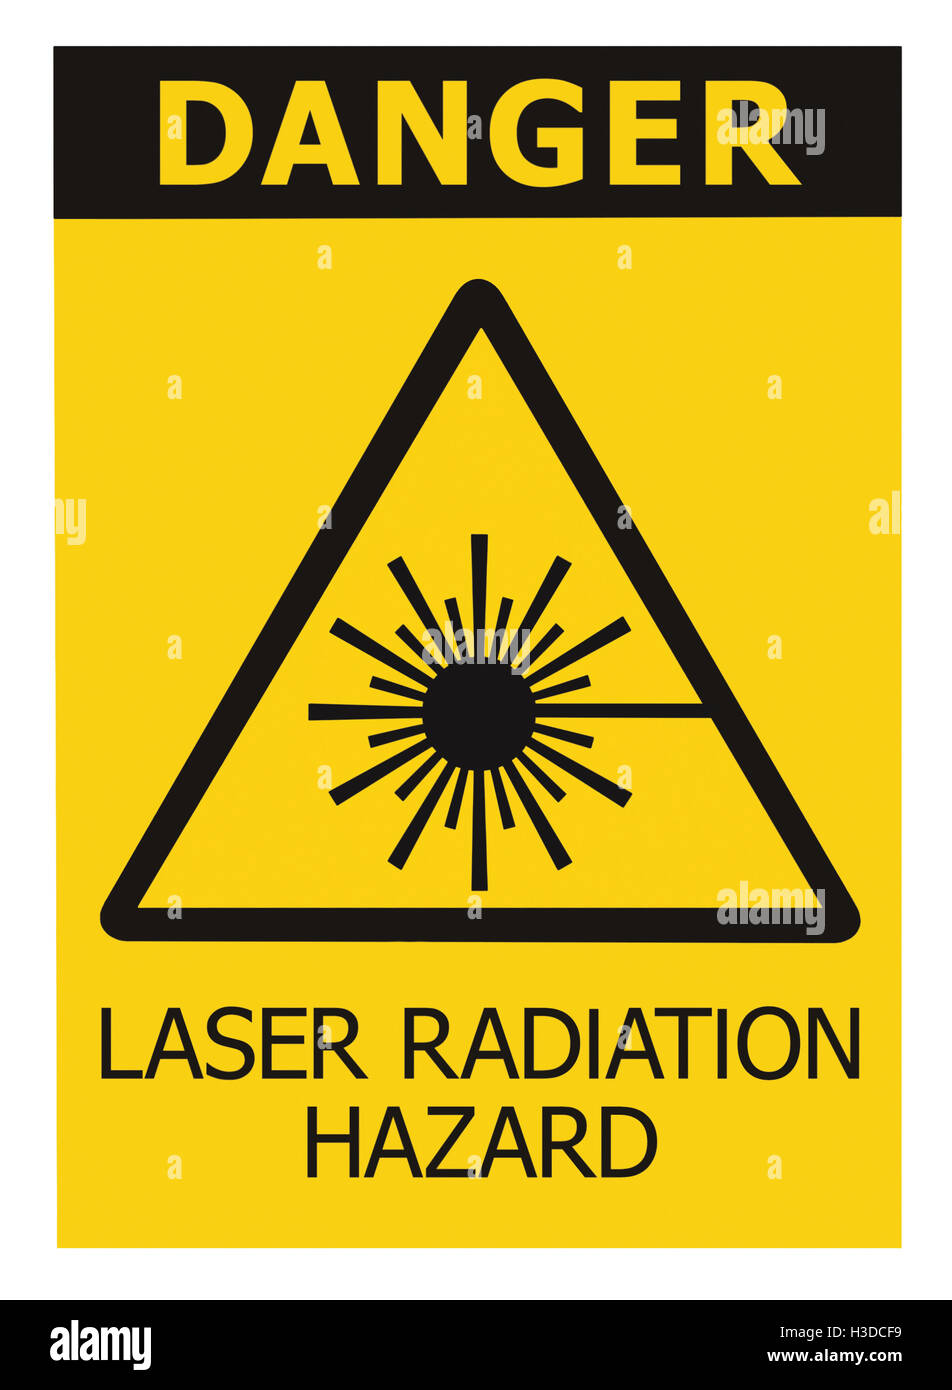 Laser radiation hazard safety danger warning text sign sticker label, high  power beam icon signage, isolated black triangle Stock Photo - Alamy